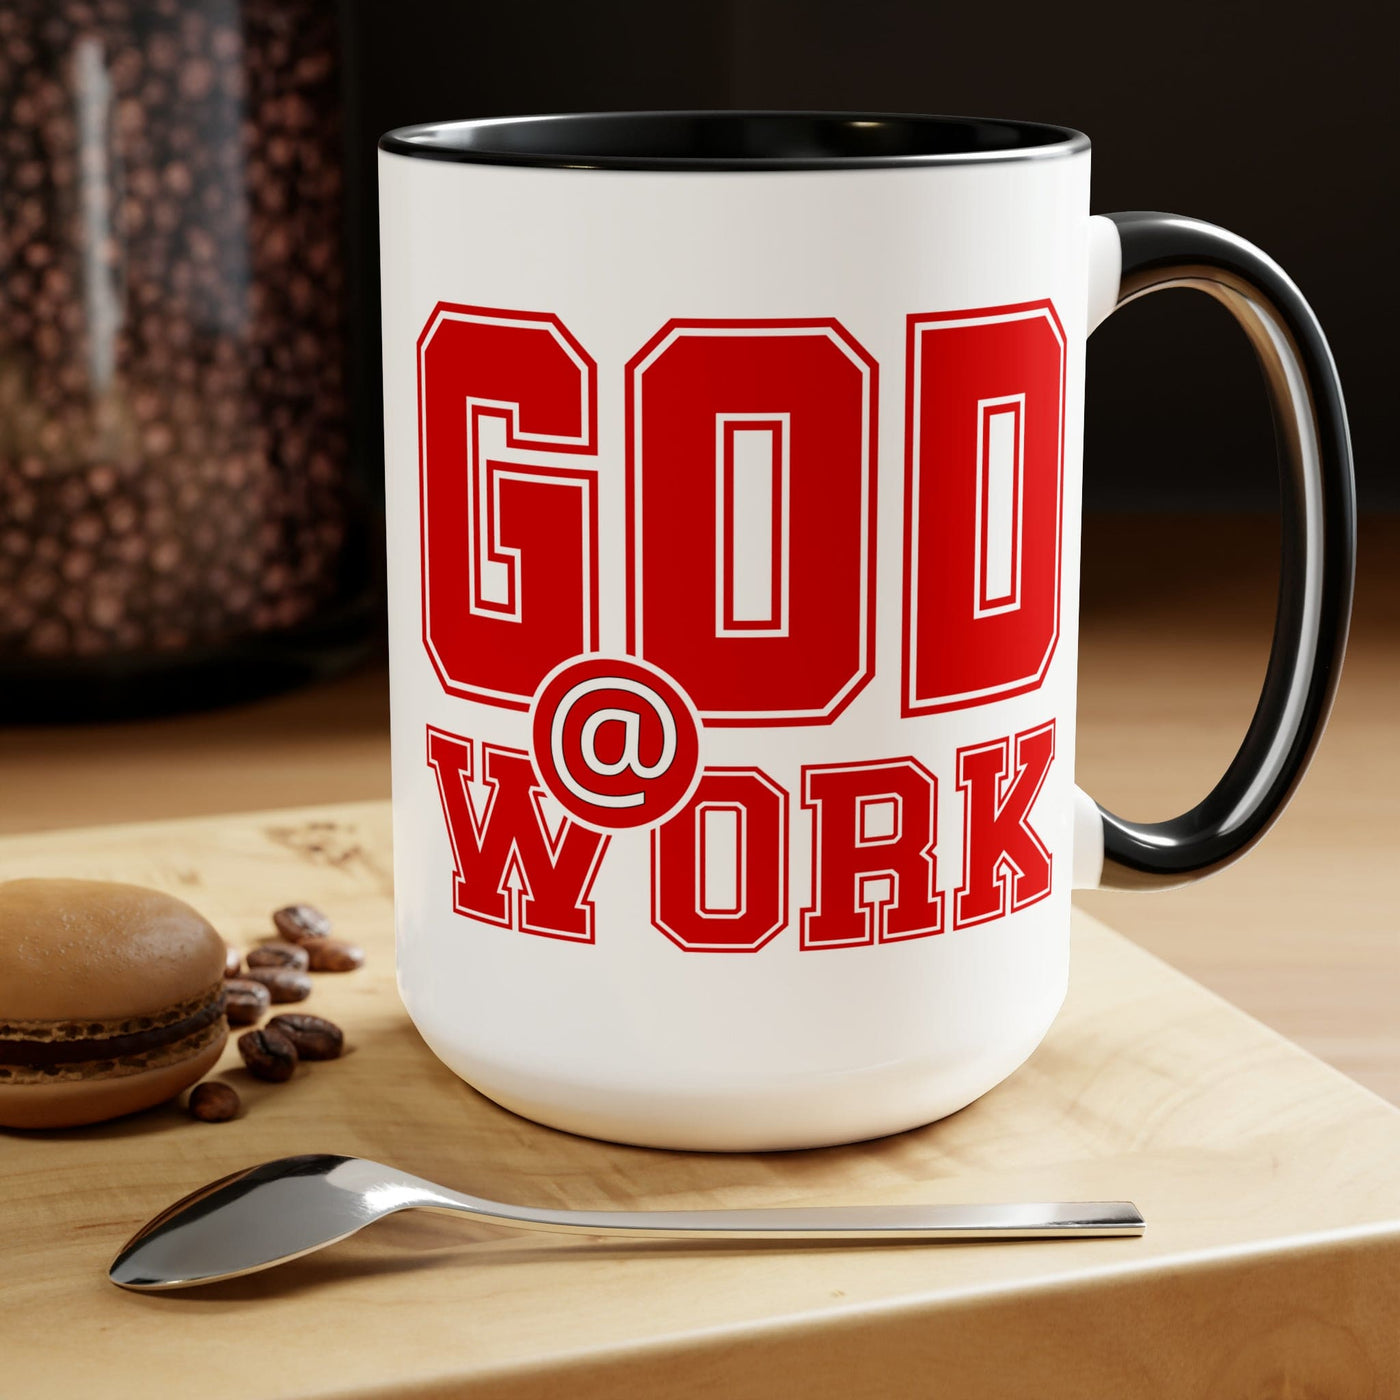 Accent Ceramic Coffee Mug 15oz - God @ Work Red And White Print - Decorative